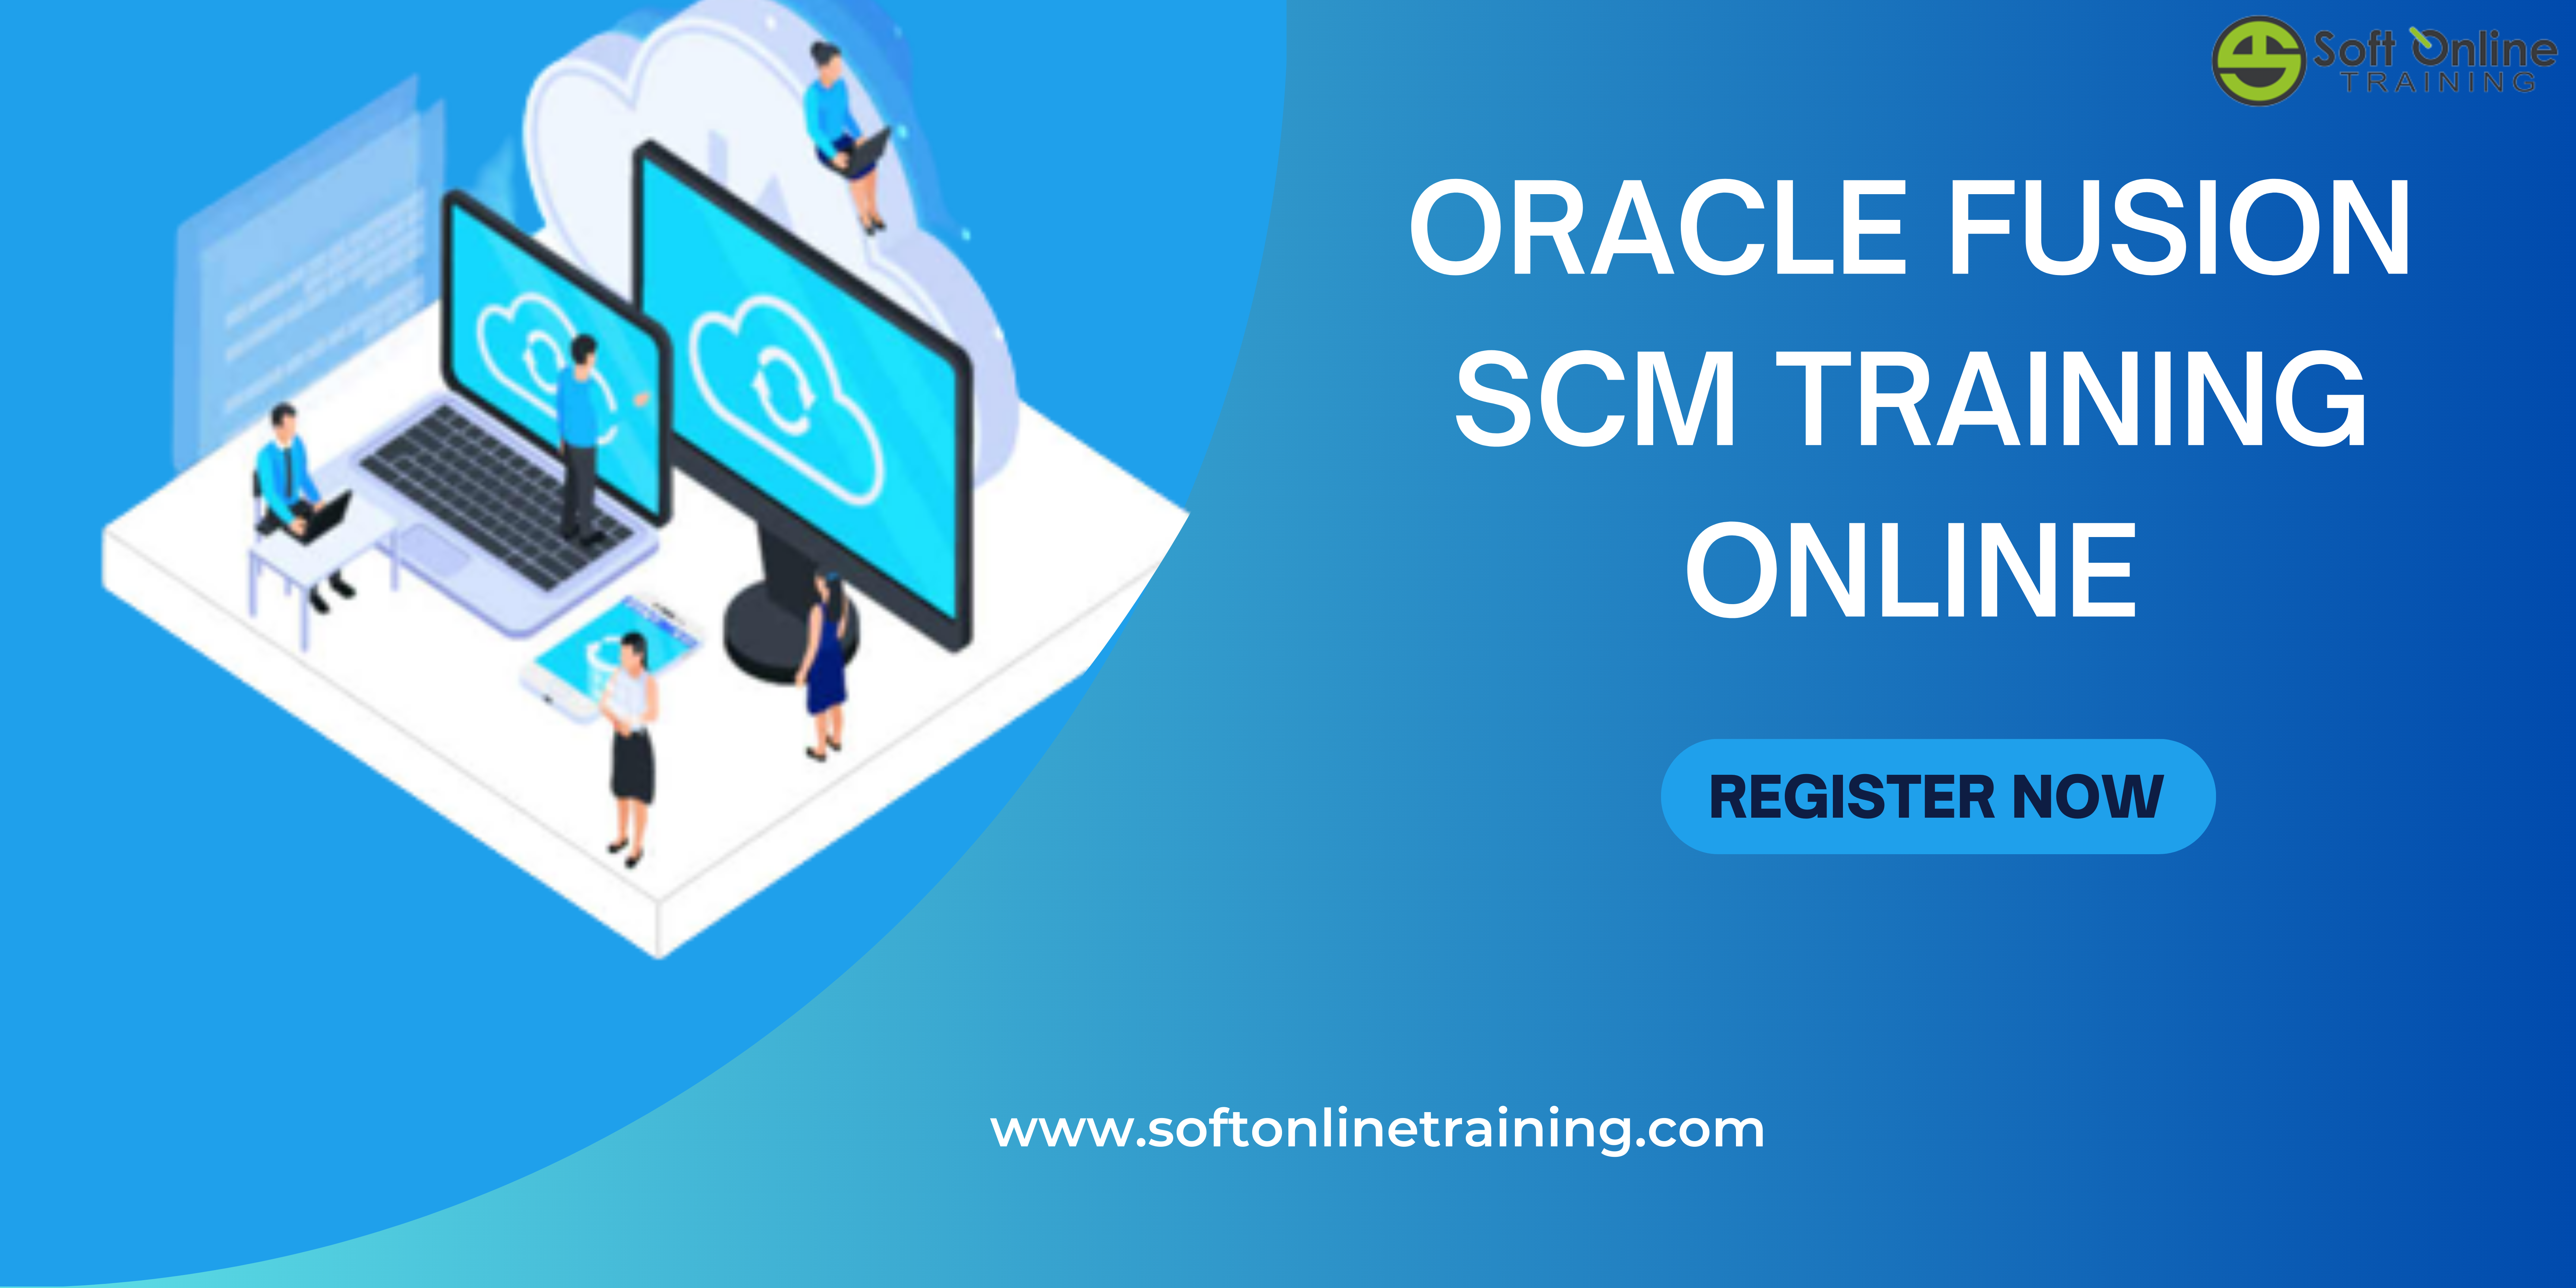 Oracle Fusion SCM Training Online